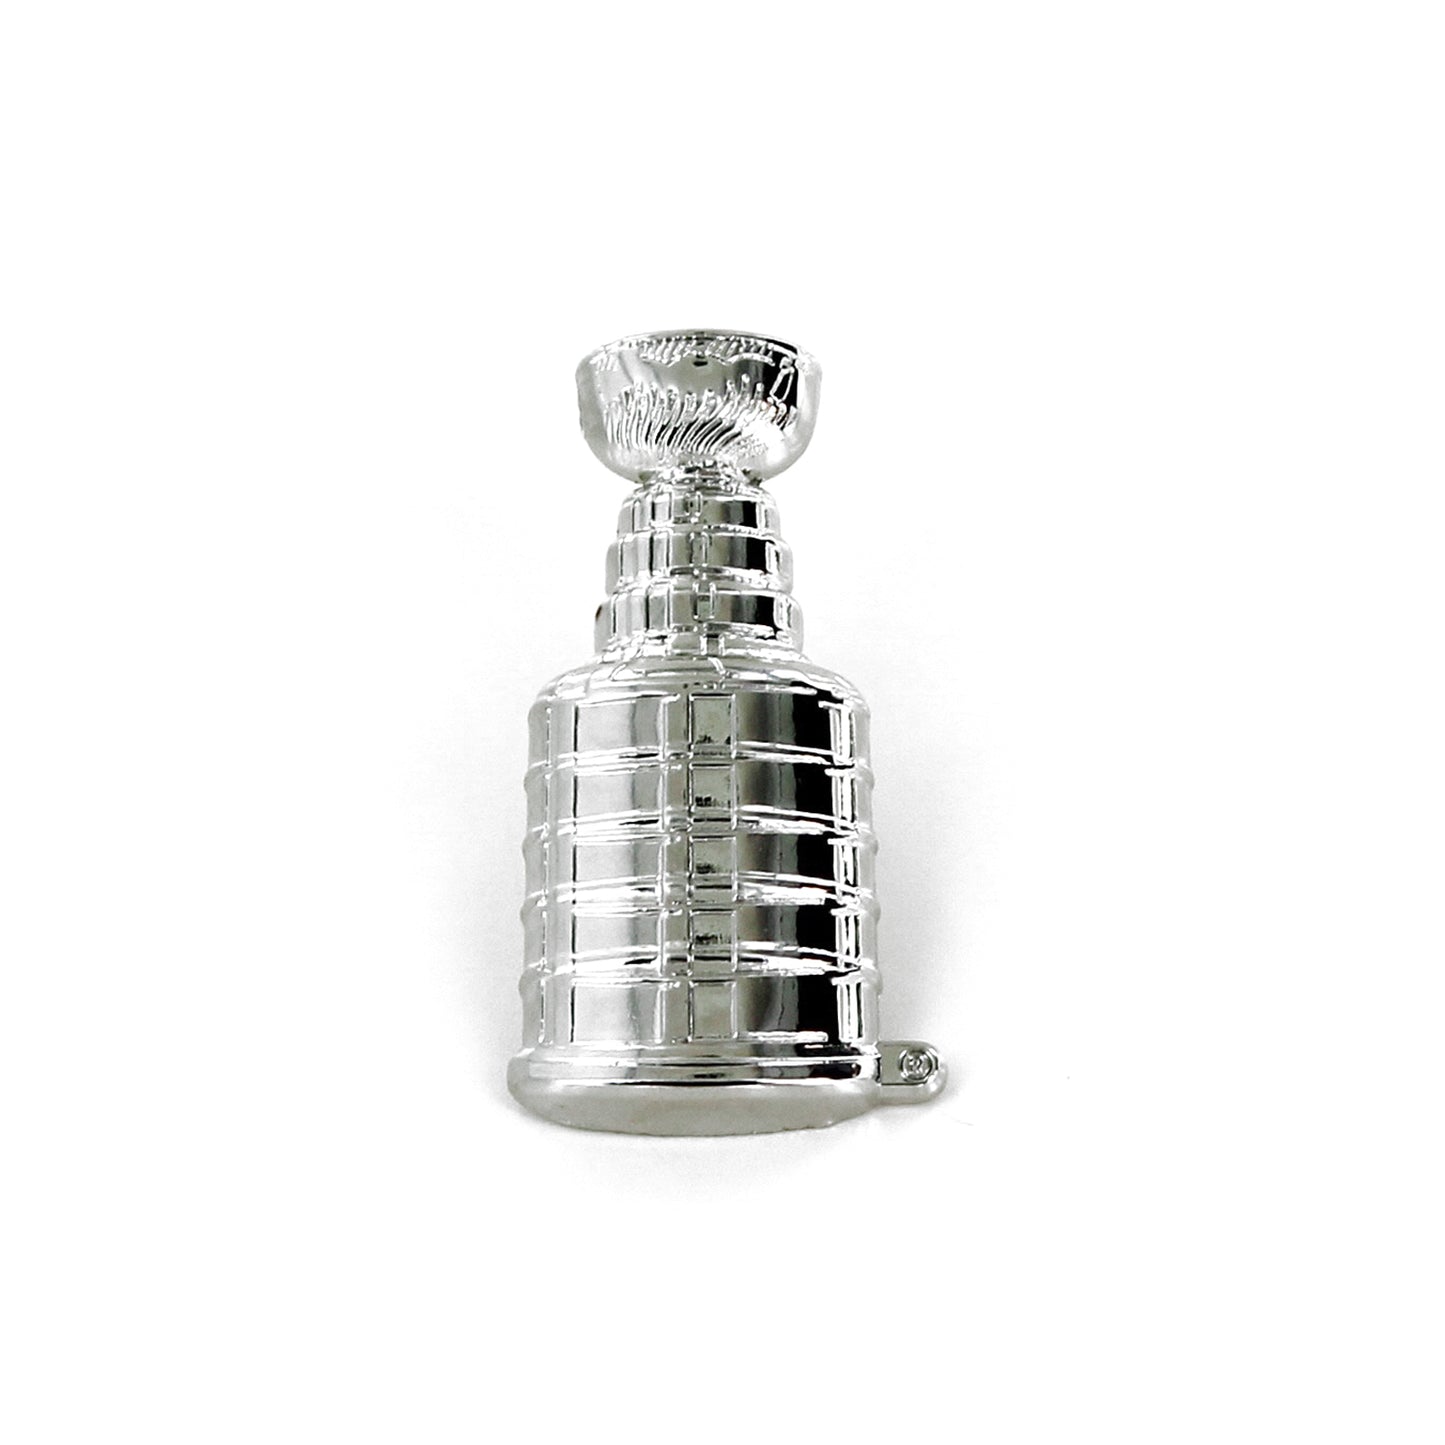 Stanley Cup Trophy Lapel Pin